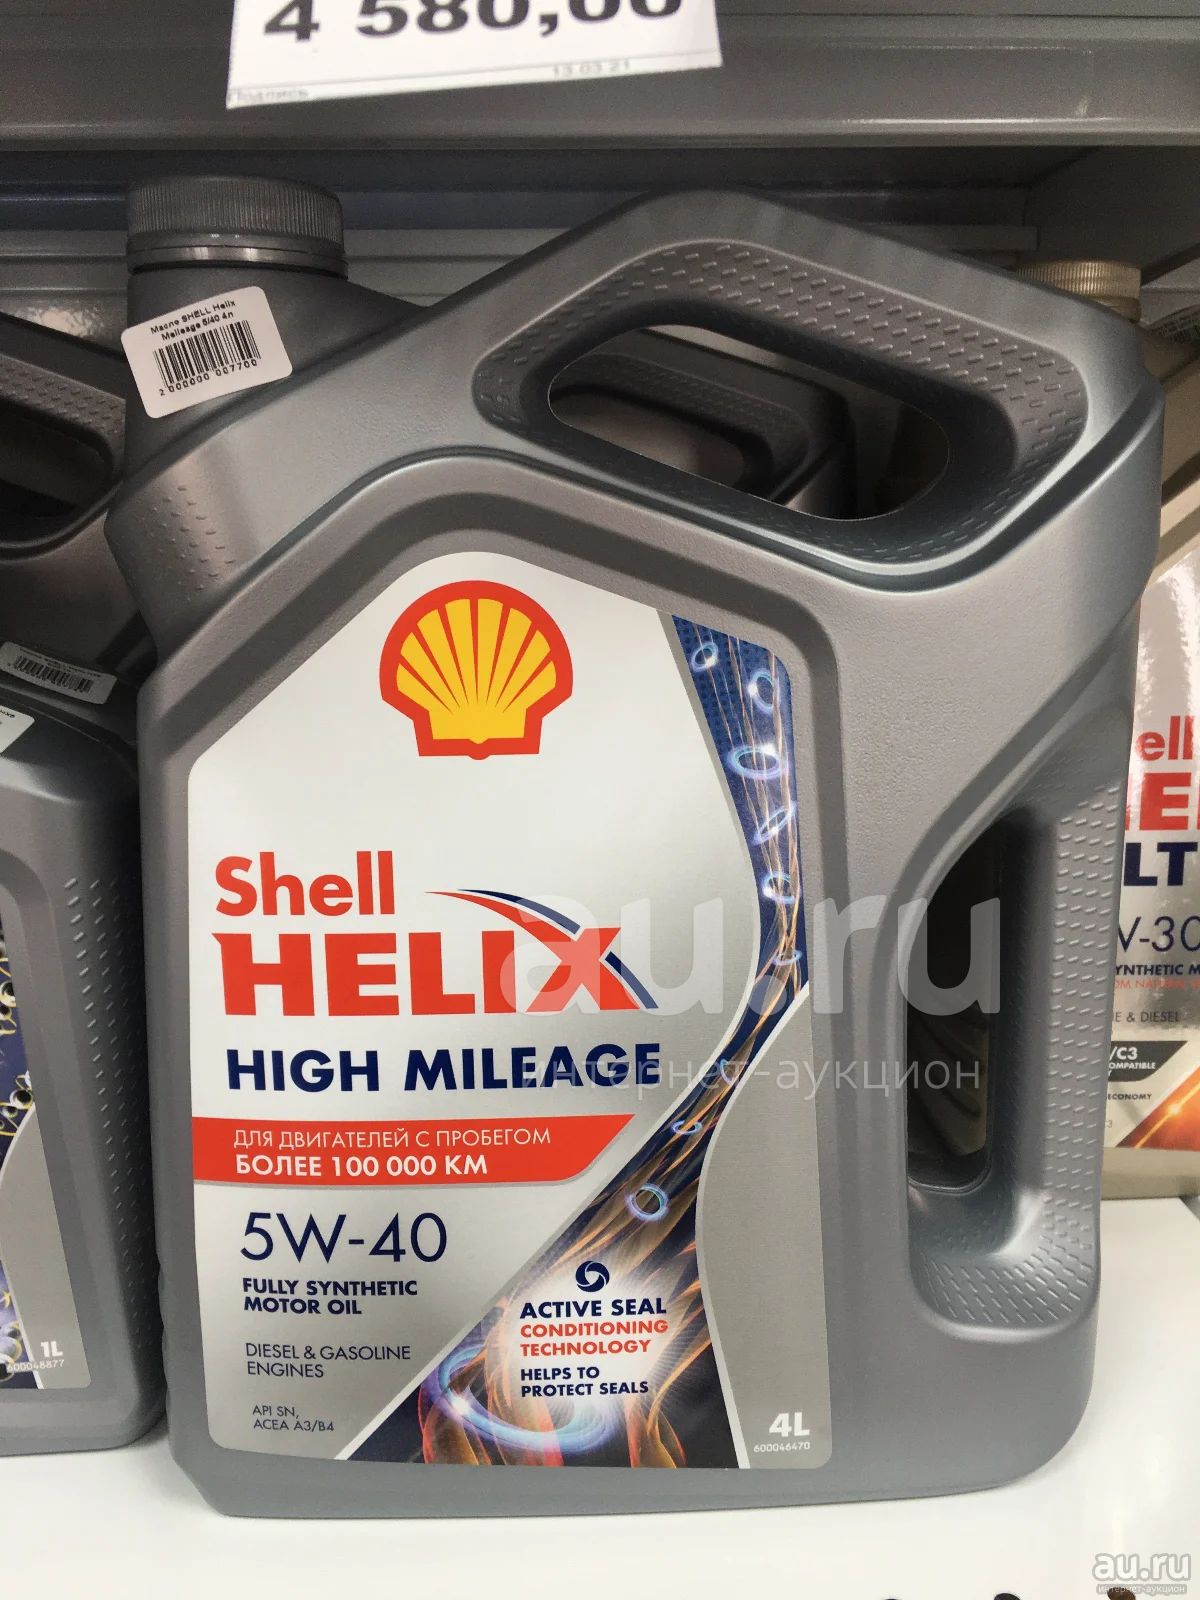 Helix high mileage. Shell Helix Mileage.